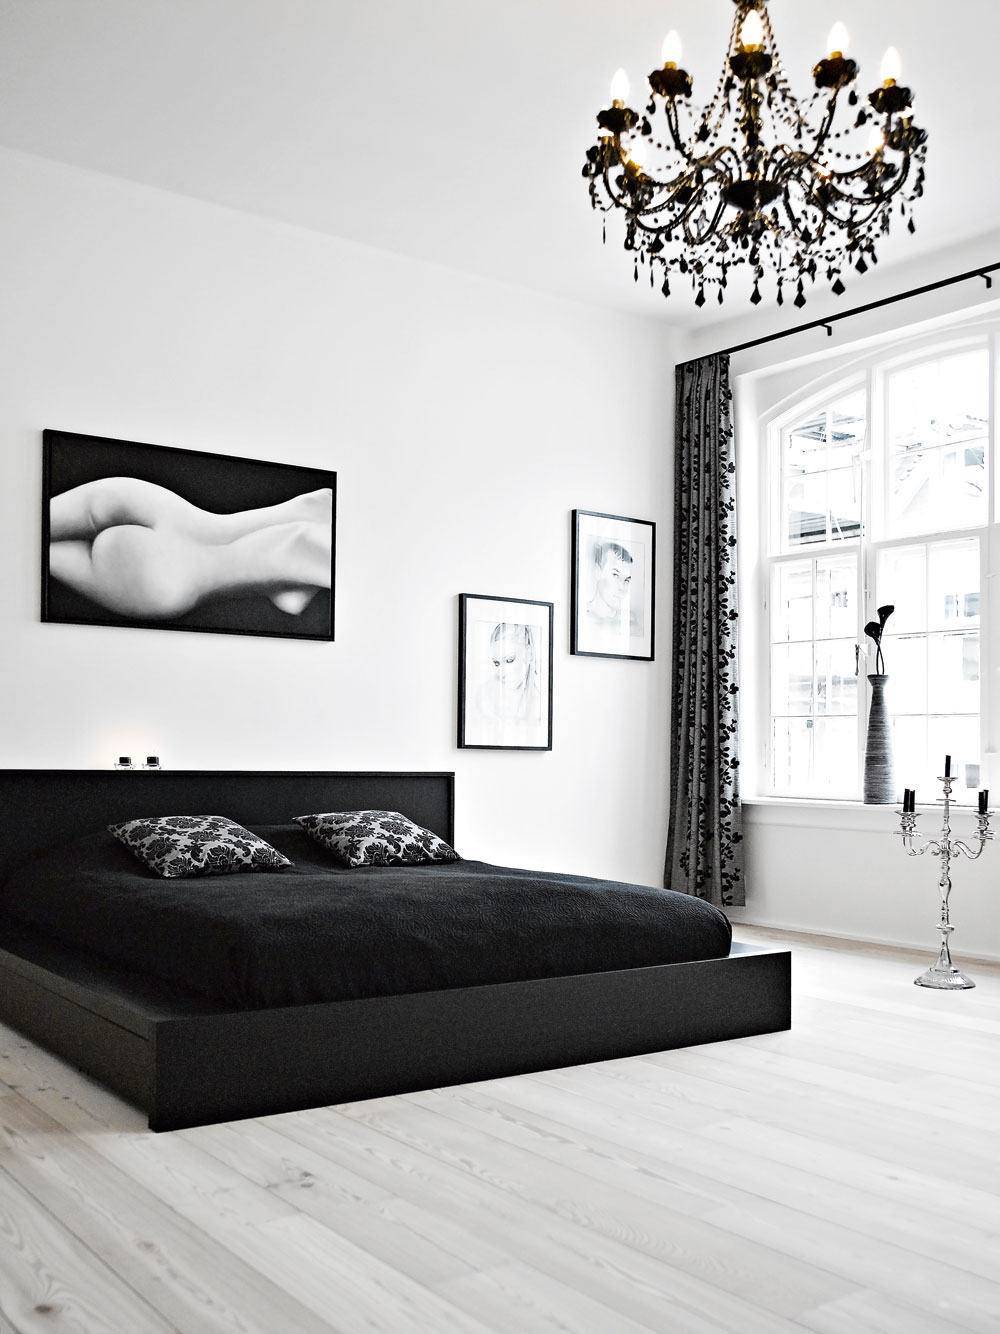 black and white bedroom ideas 40 beautiful black u0026 white bedroom designs PUUPDKS